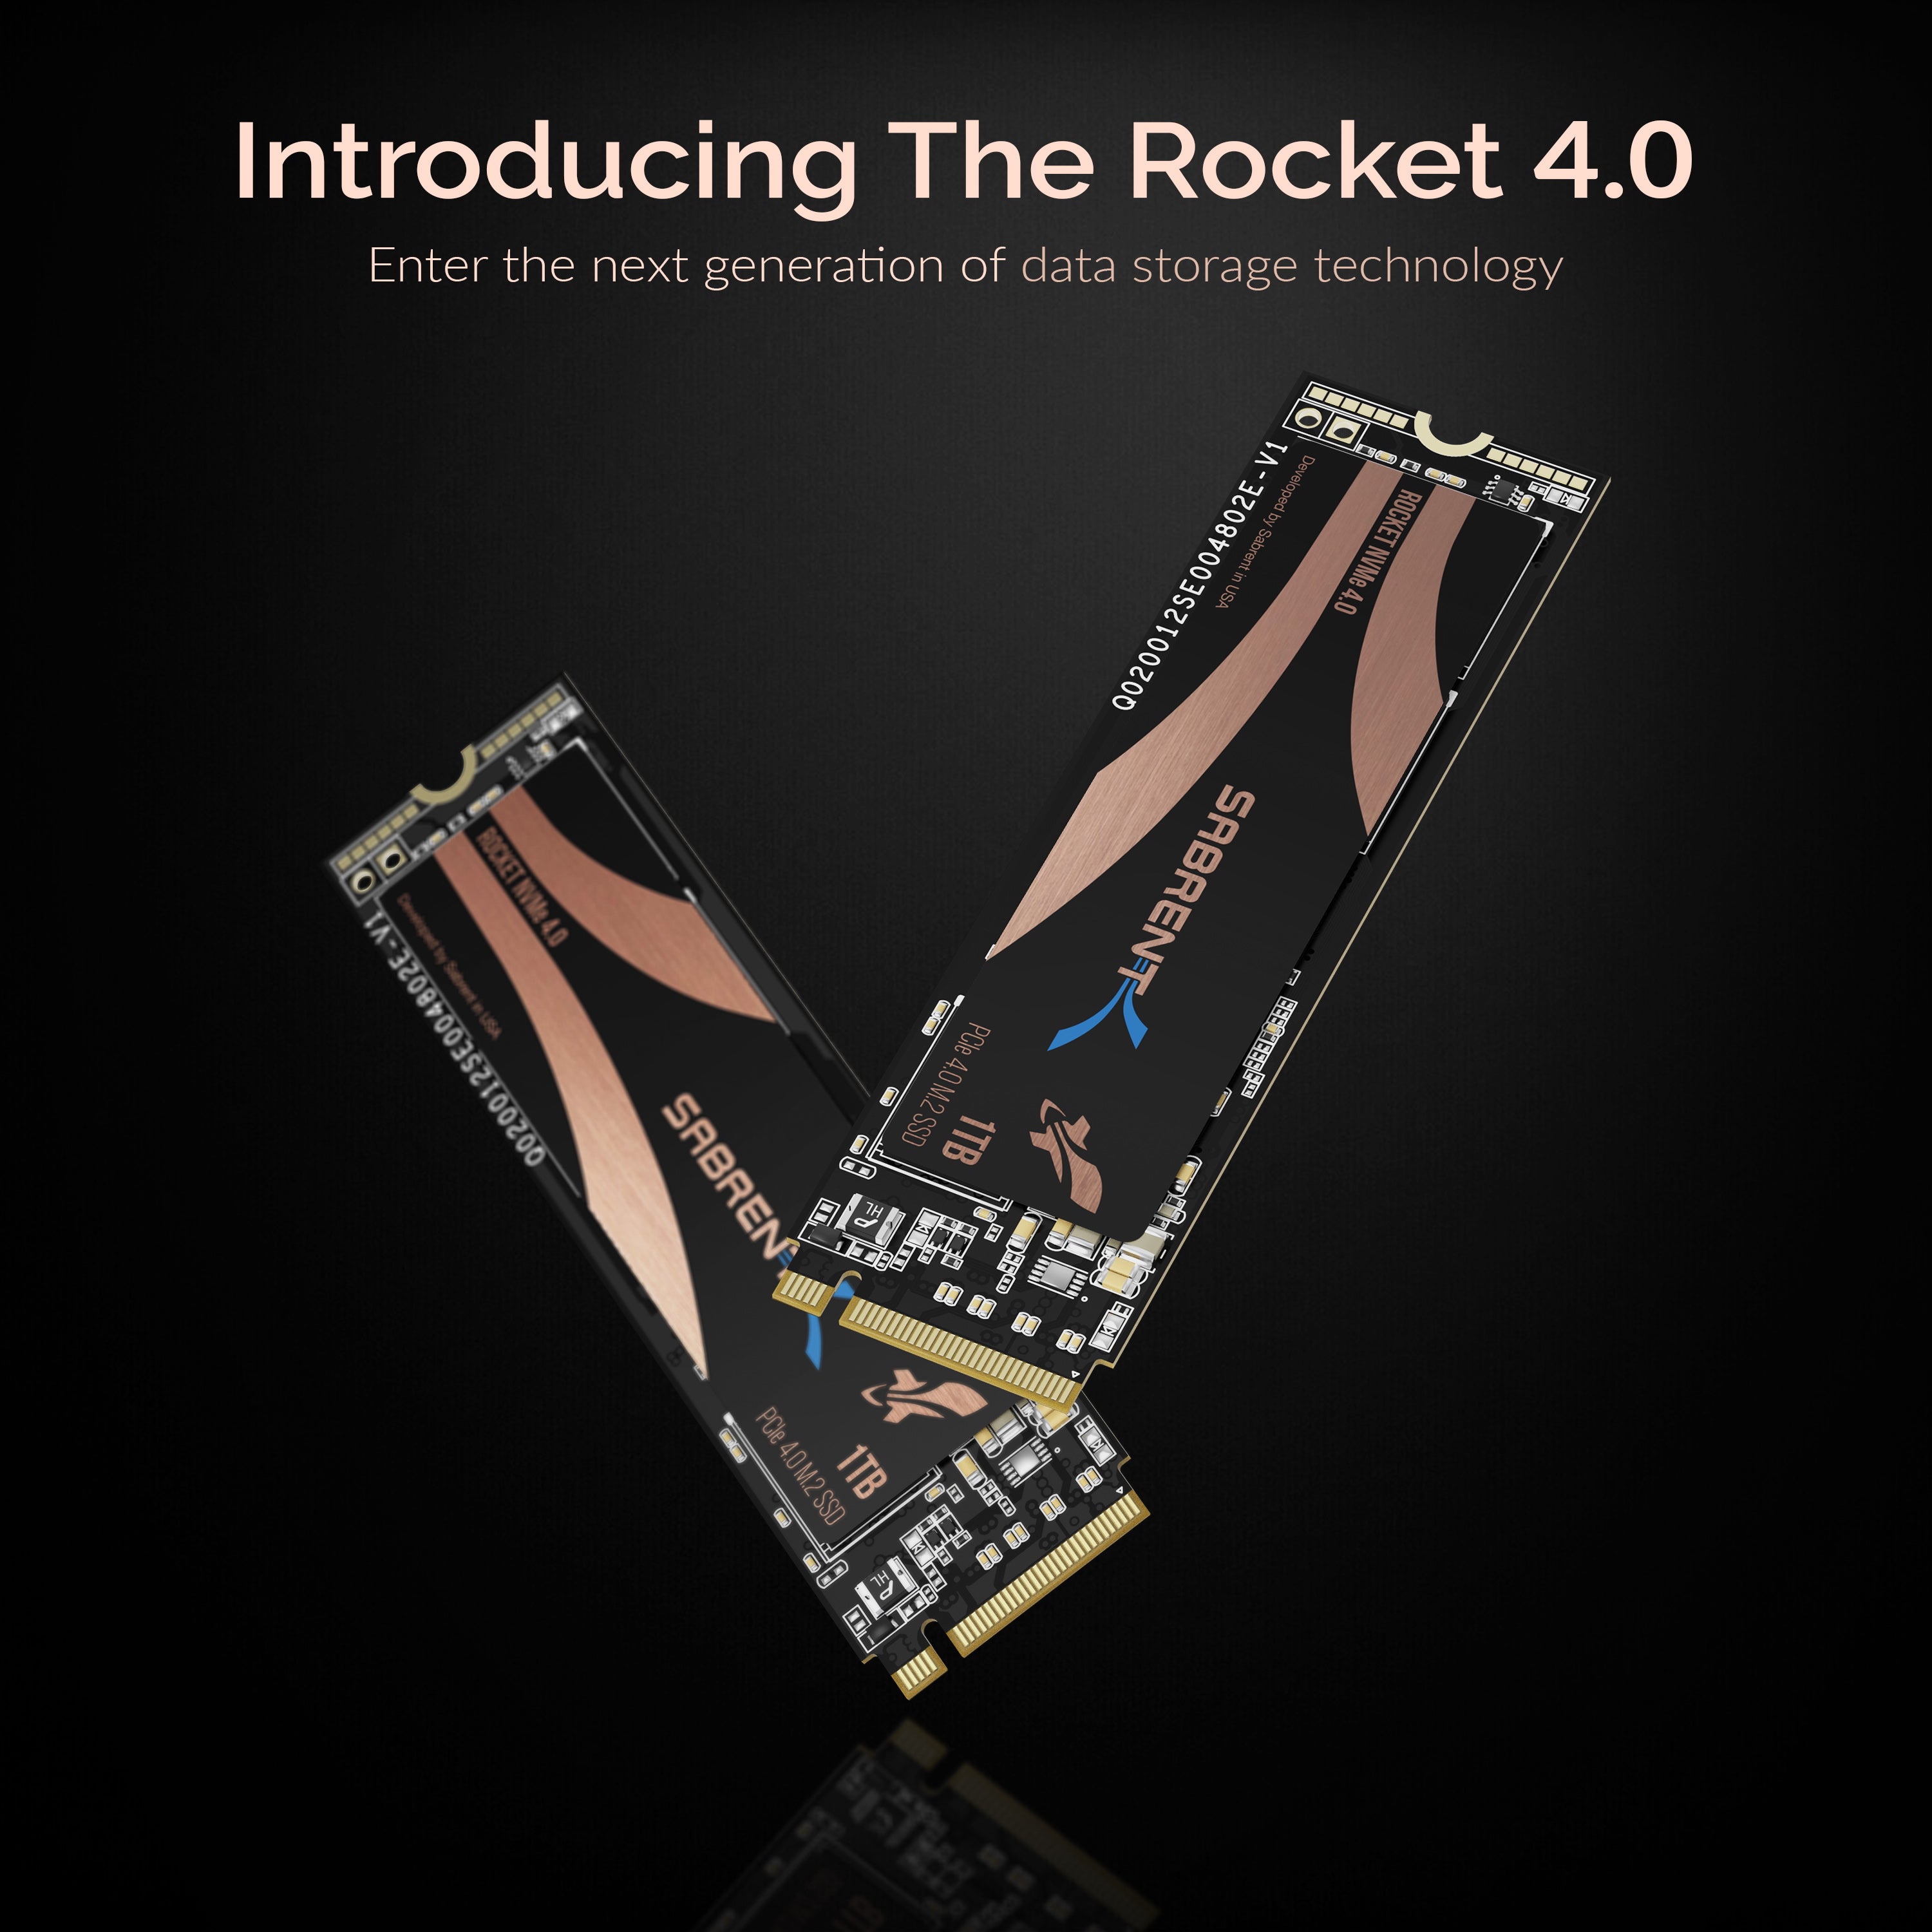 Sabrent's new Rocket 4 Plus Destroyer: 32TB ultra-fast SSDs @ 28GB/sec